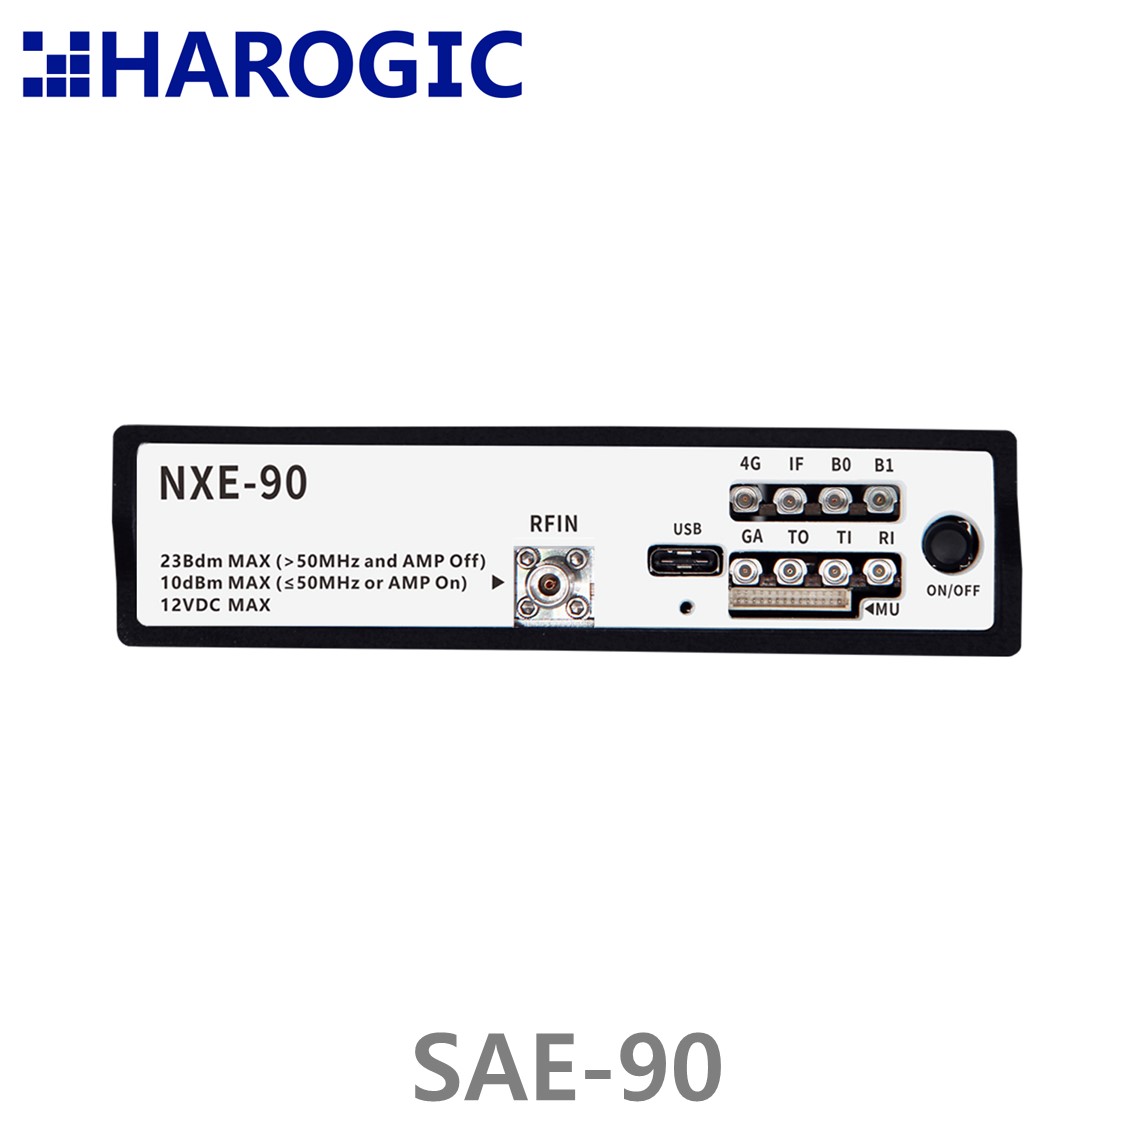 [ HAROGIC ] SAE-90, USB 초소형 리얼타임 스펙트럼분석기 9 kHz - 9.5 GHz, 100MHz 대역폭, 1.2THz/s sweep speed, USB3.0